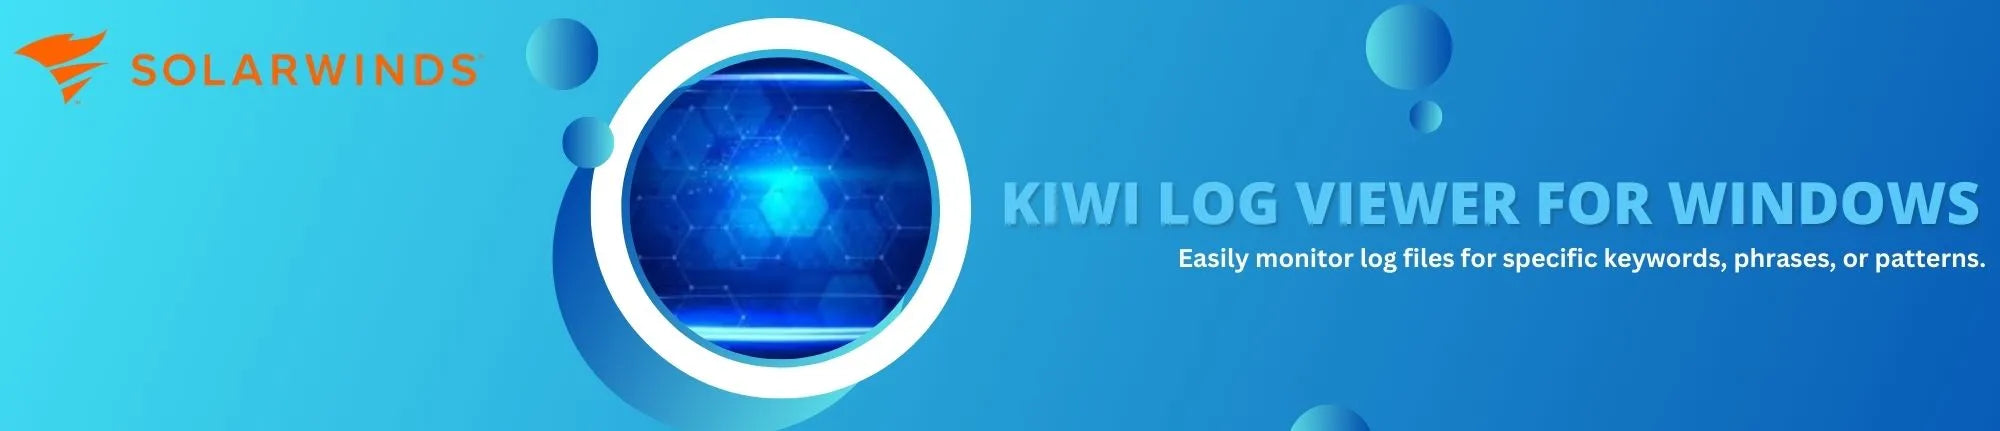 SolarWinds Kiwi Log Viewer for Windows